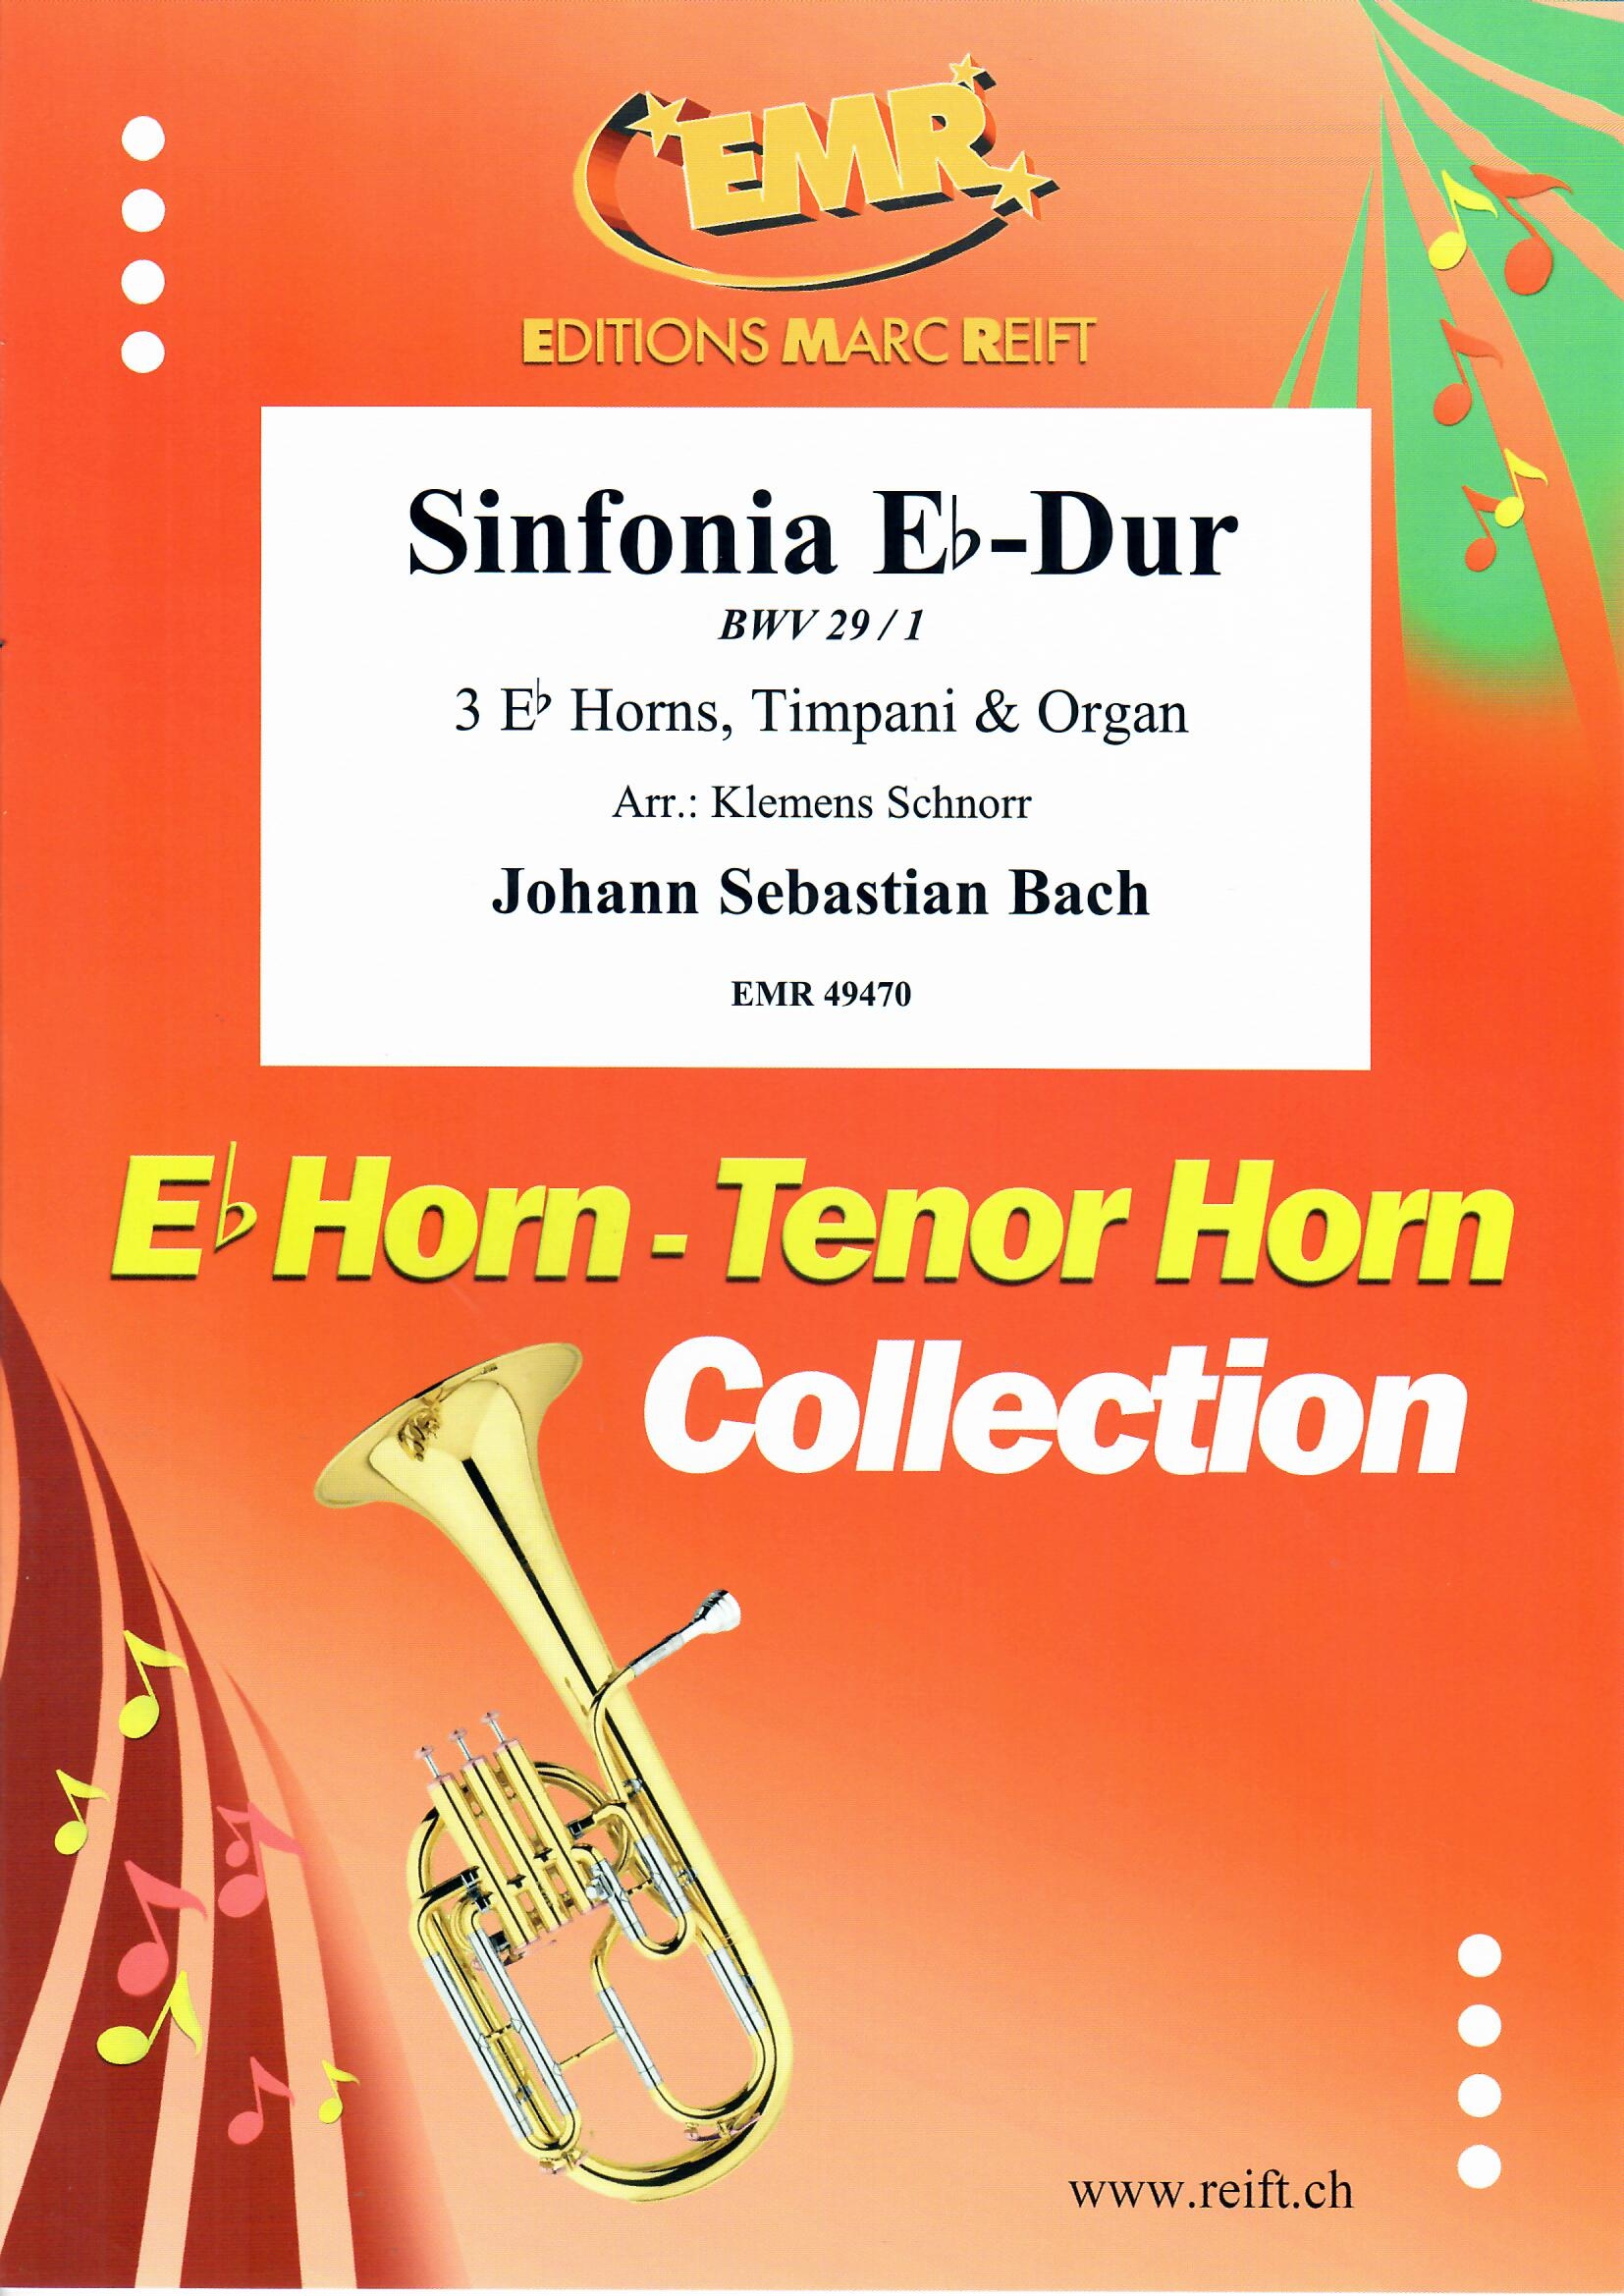 SINFONIA EB-DUR, NEW & RECENT Publications, Trios